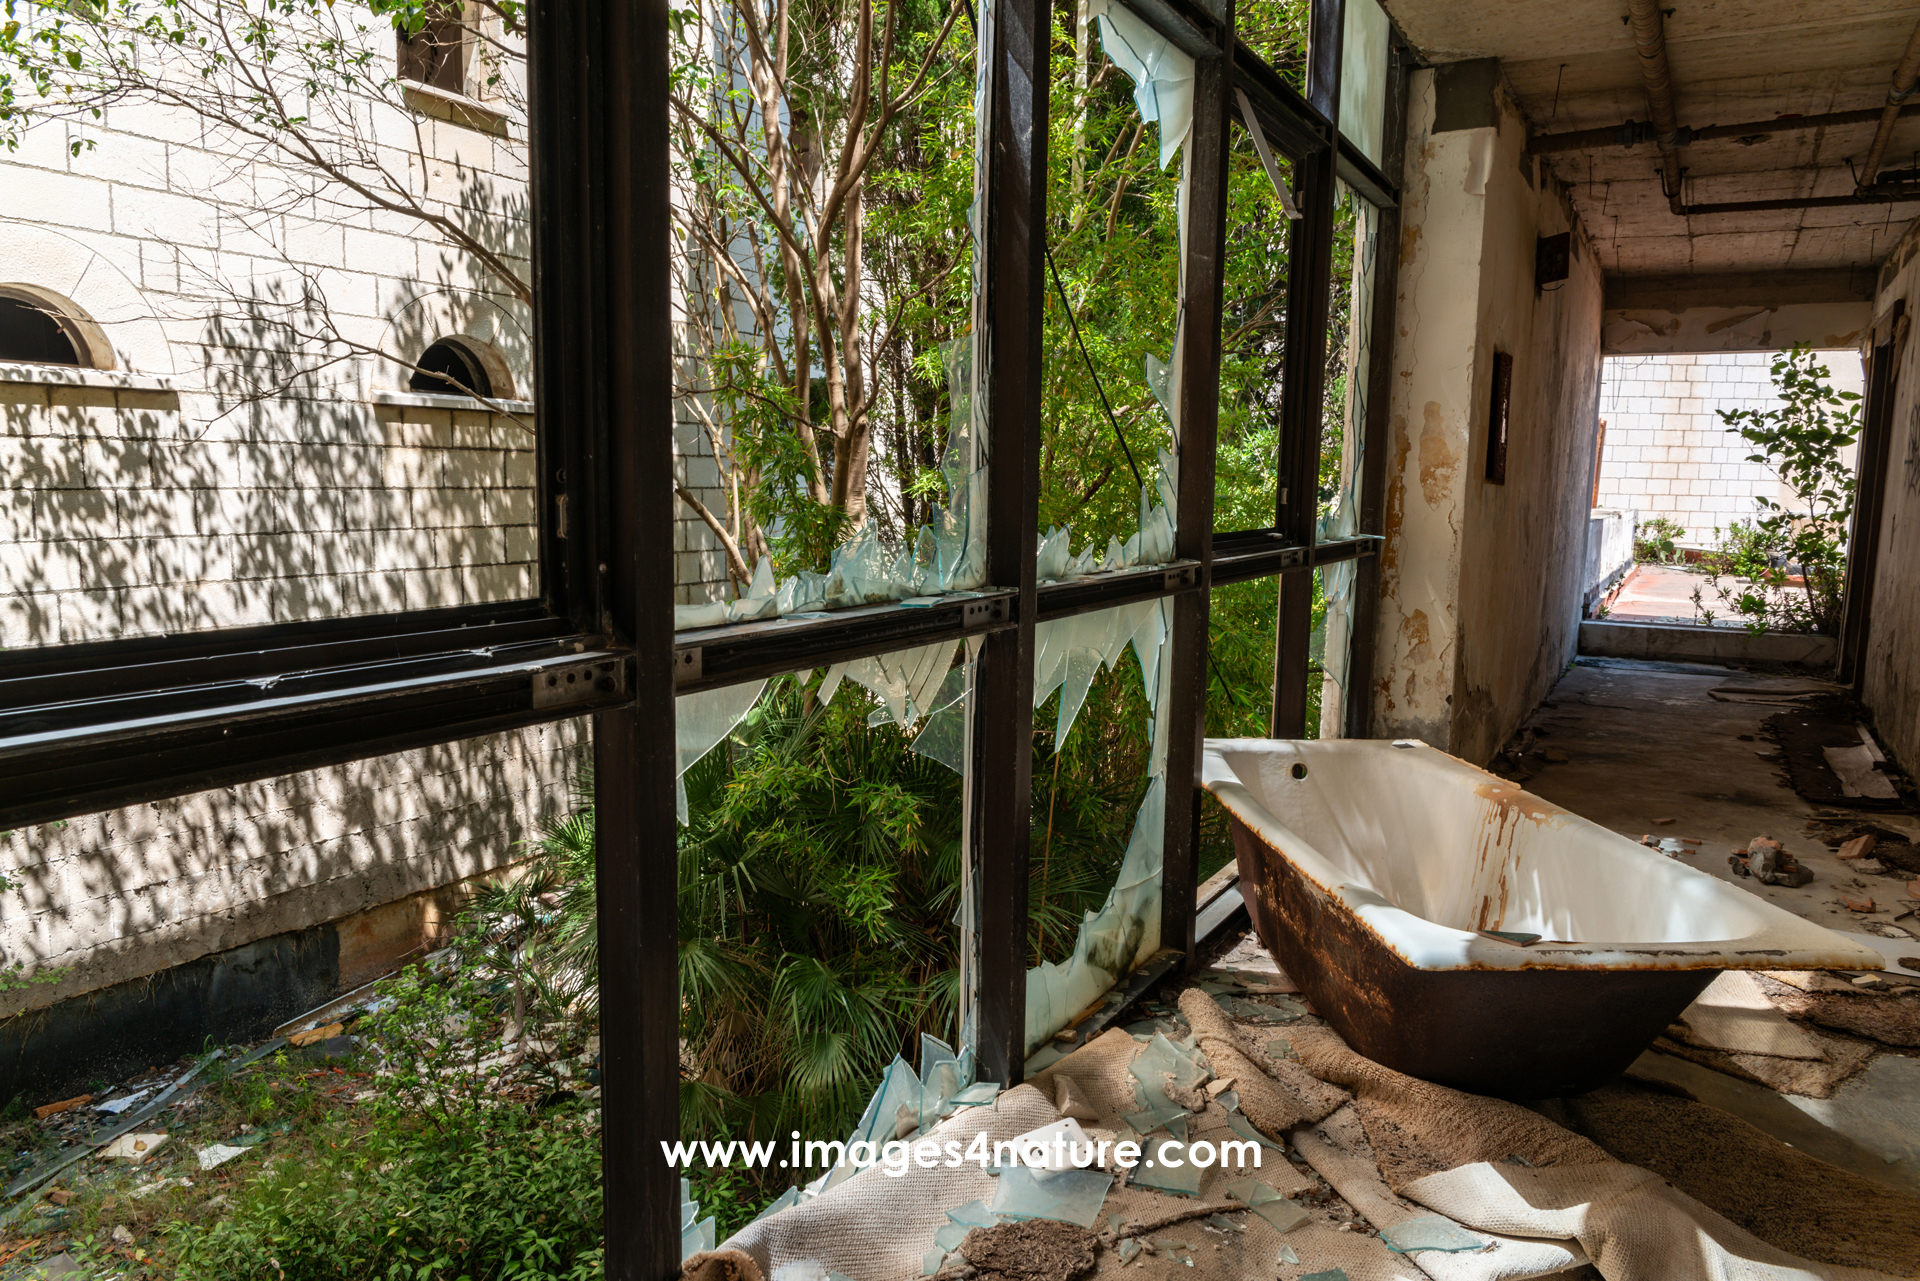 Rusty dismantled bathtub standing in corridor of destroyed hotel